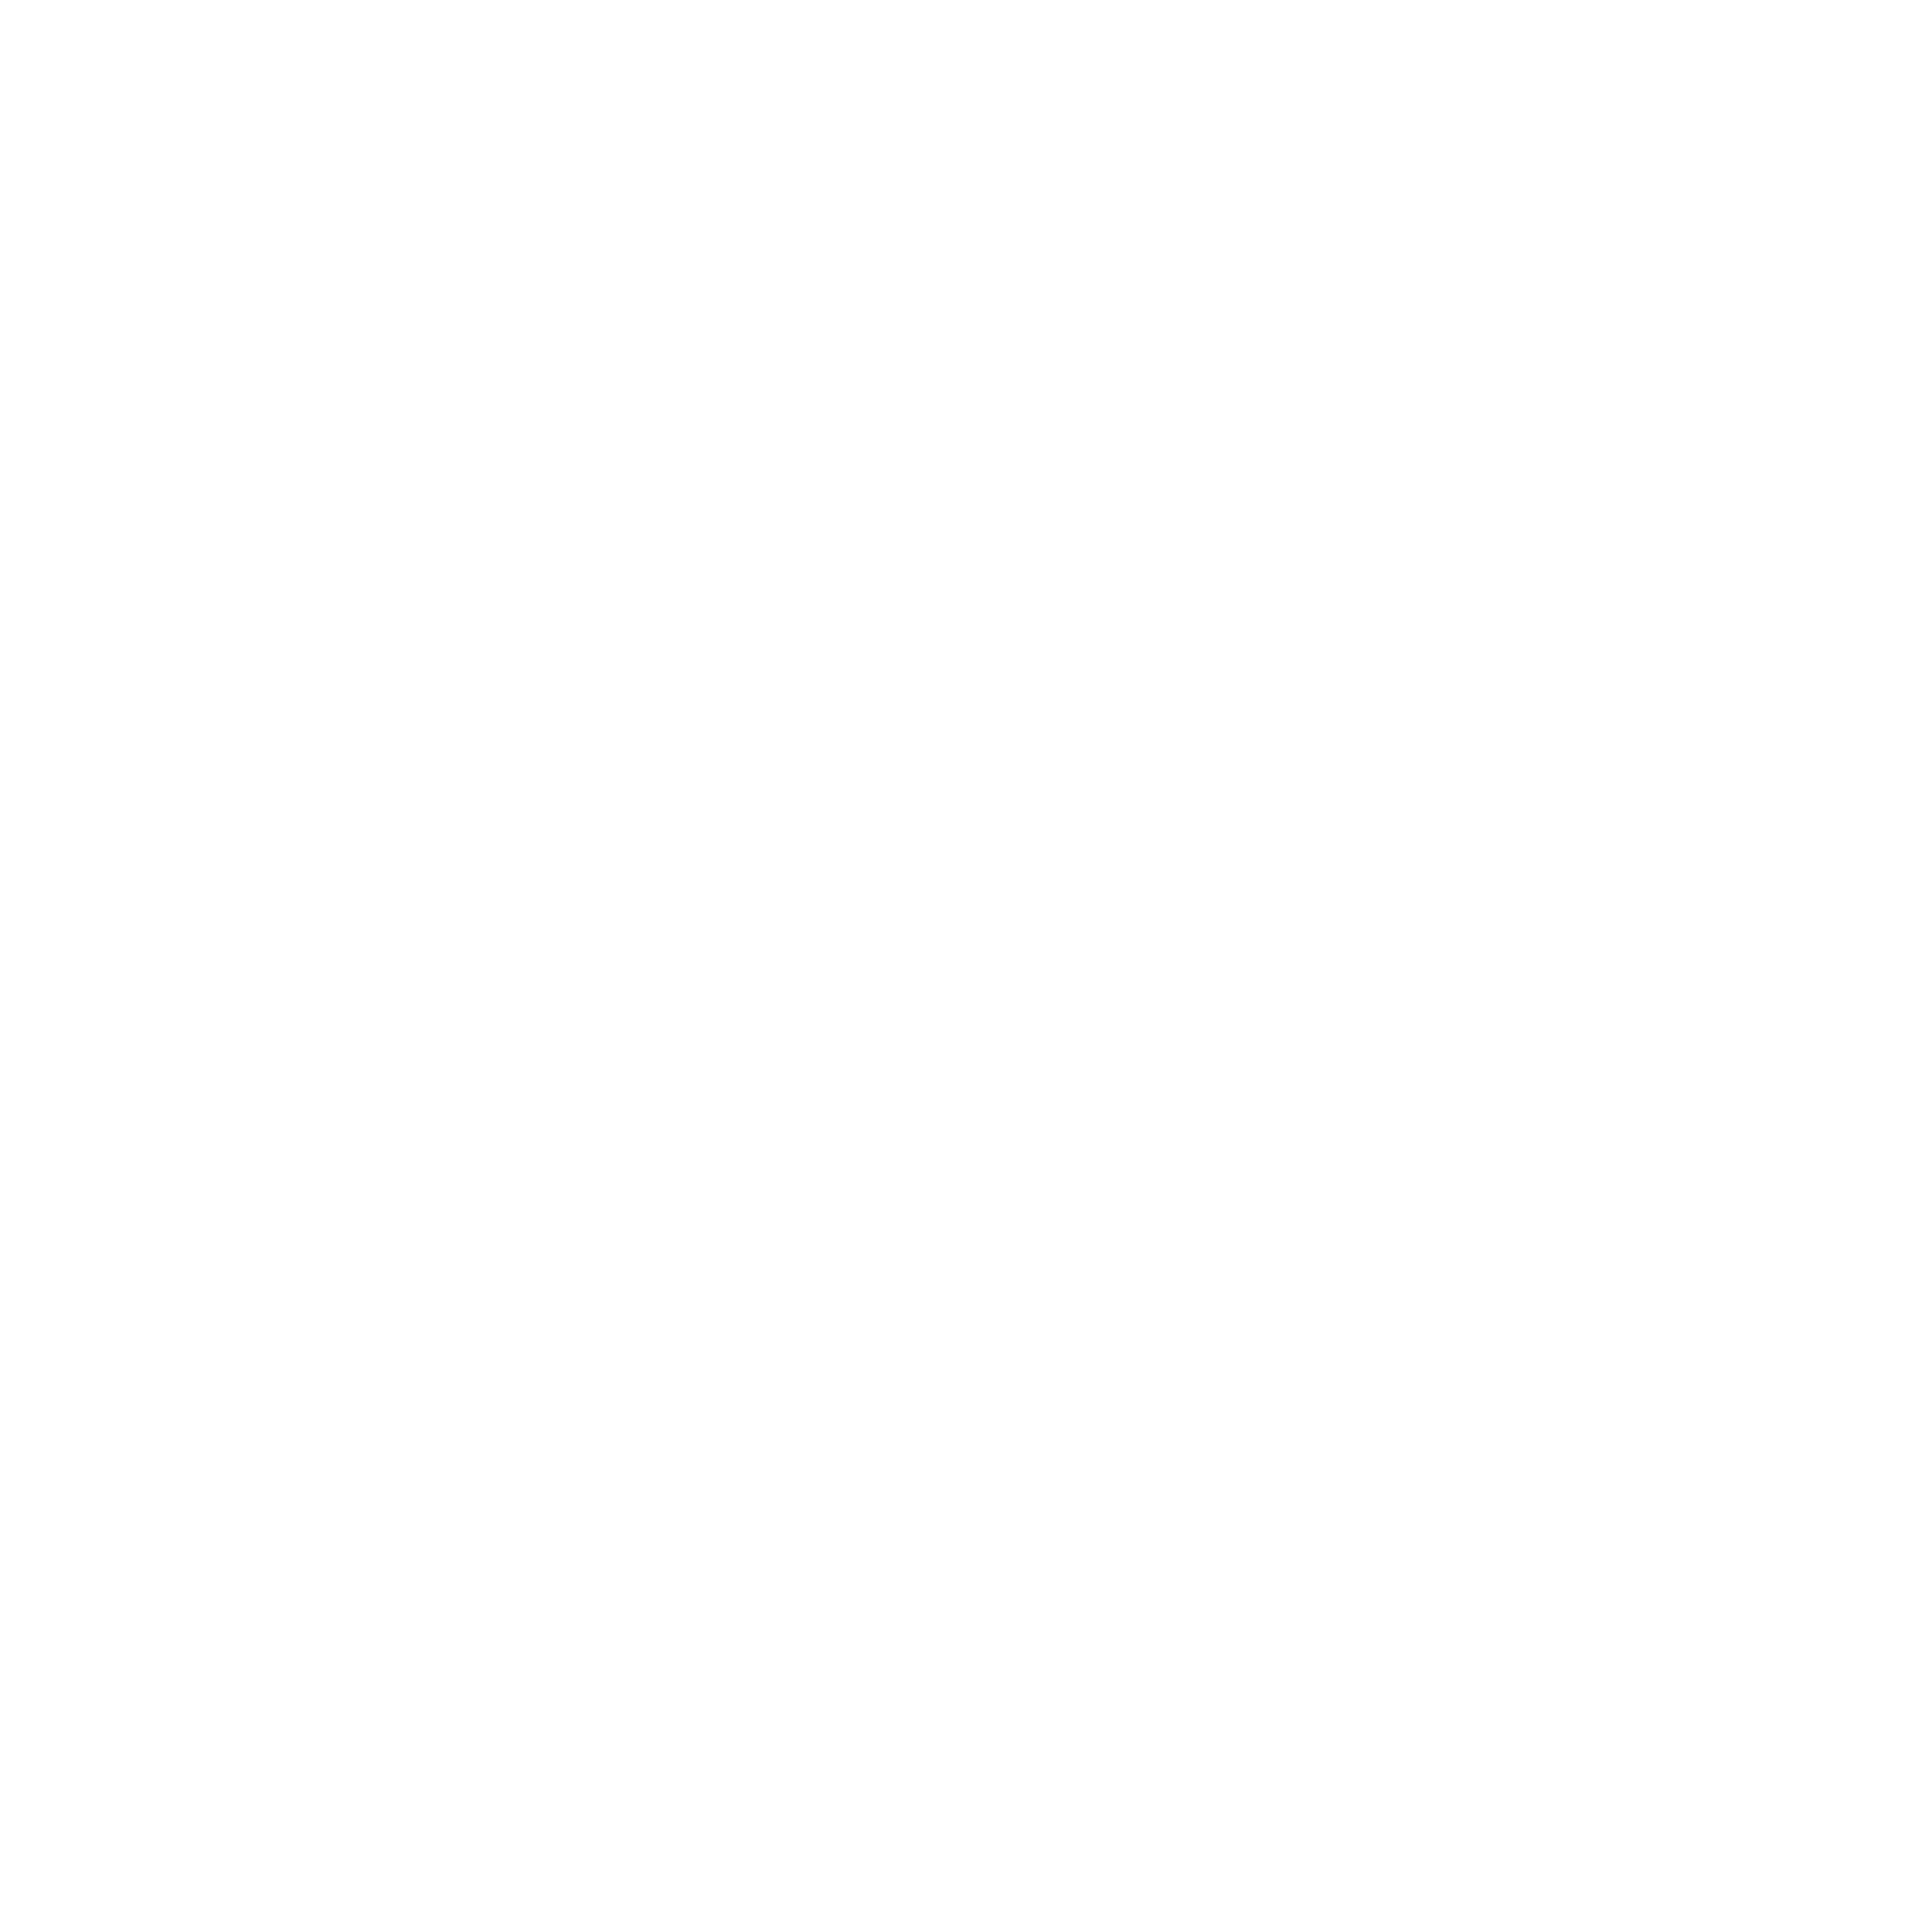 Abba Fathers Christian Store